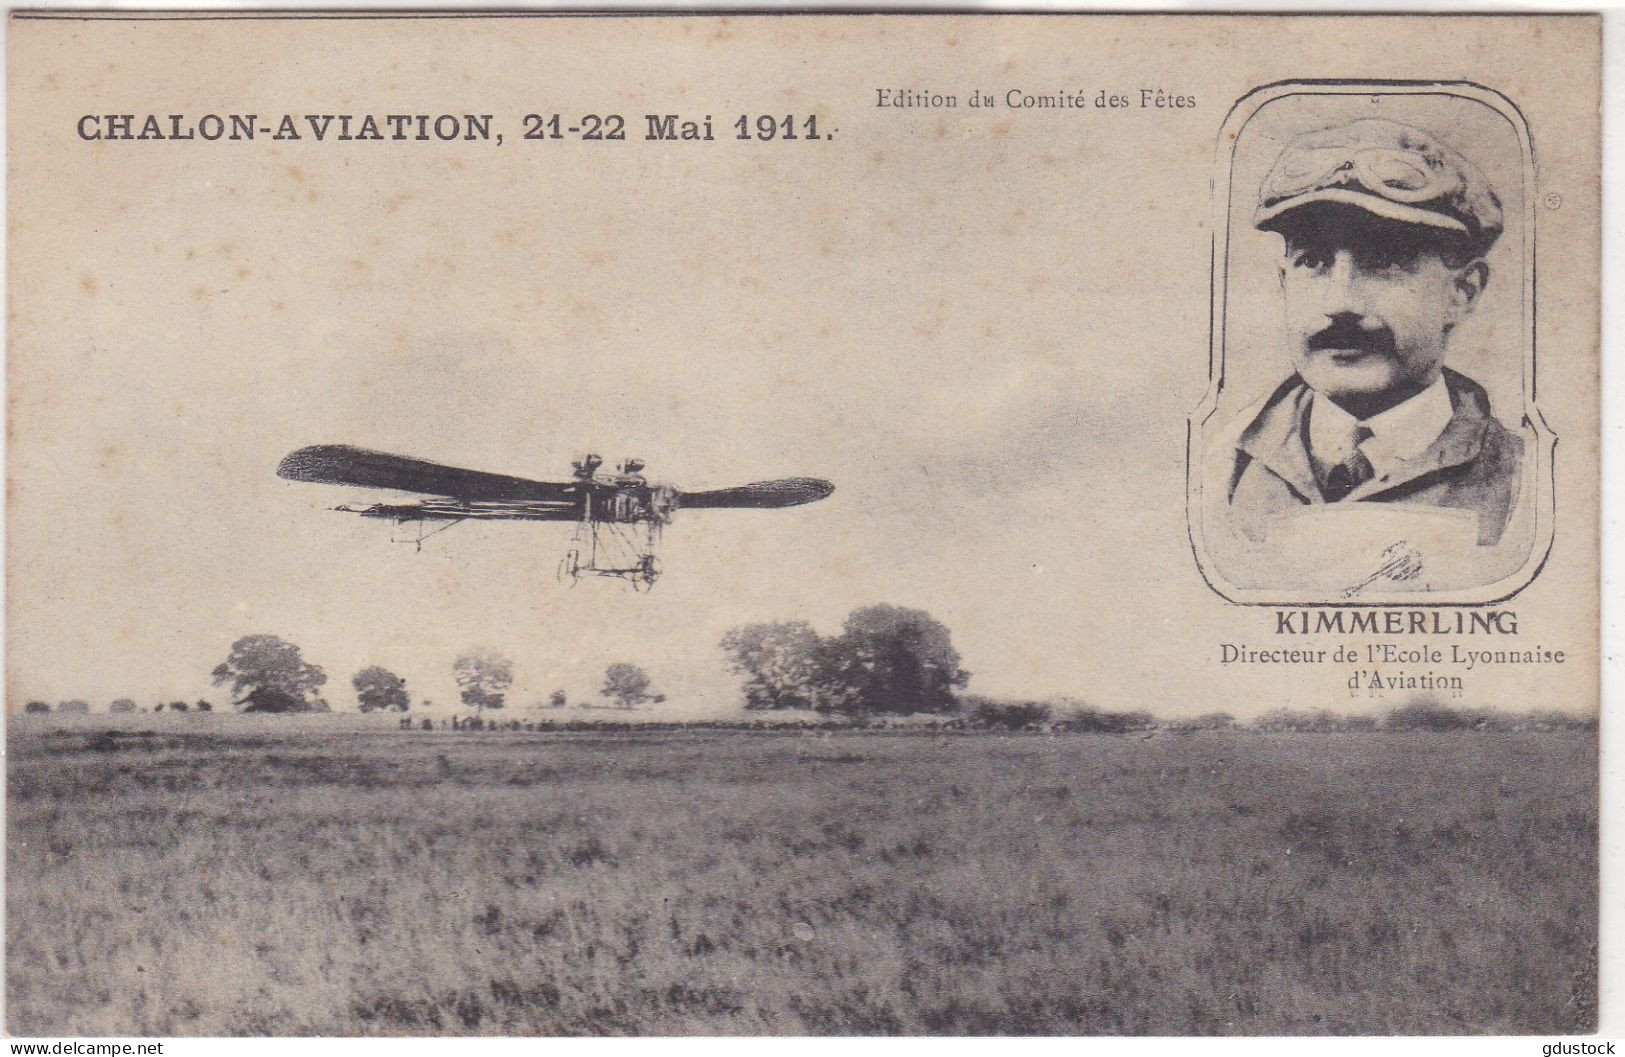 Chalon-Aviation, 21, 22 Mai 1911 - Kimmerling Directeur De L'Ecole Lyonnaise D'Aviation - Aviateurs